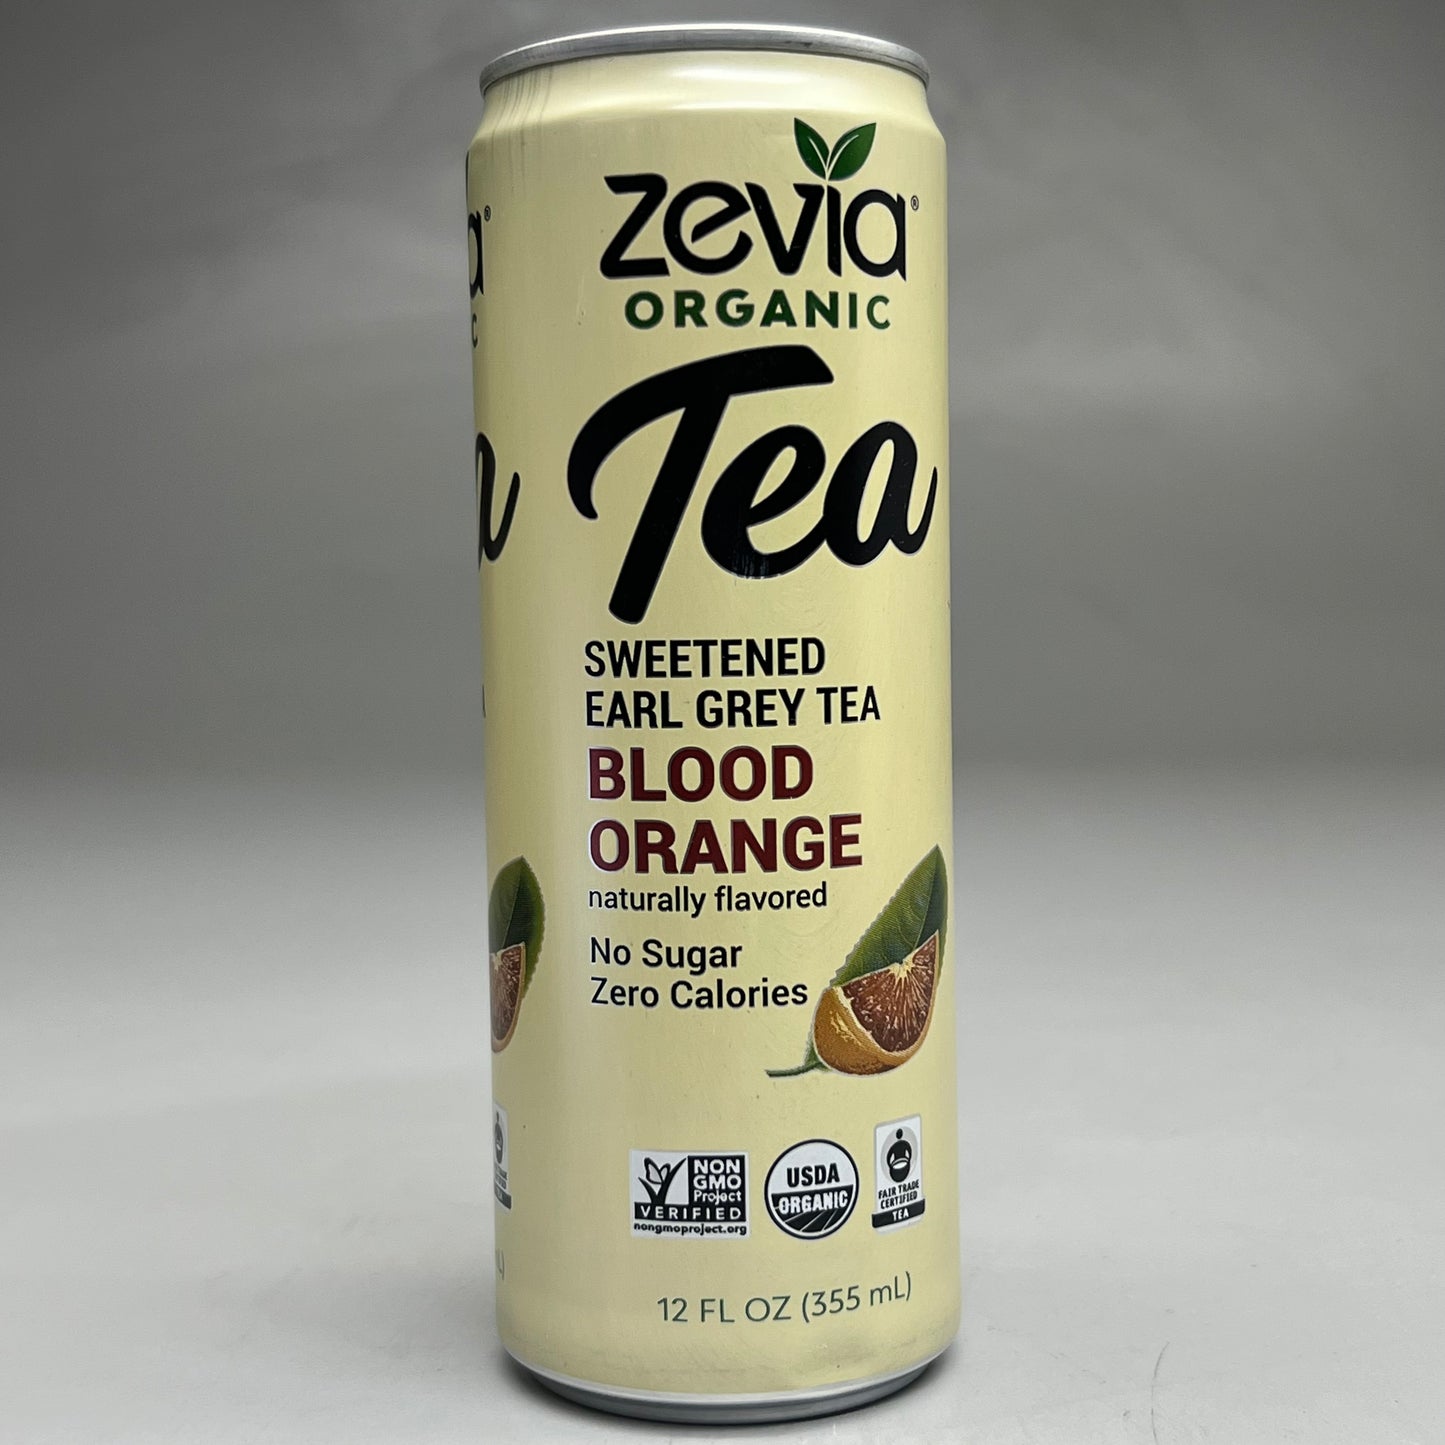 ZA@ ZEVIA 12PK! Organic Tea Sweetened Earl Grey Tea Blood Orange 12fl oz  (11/24)